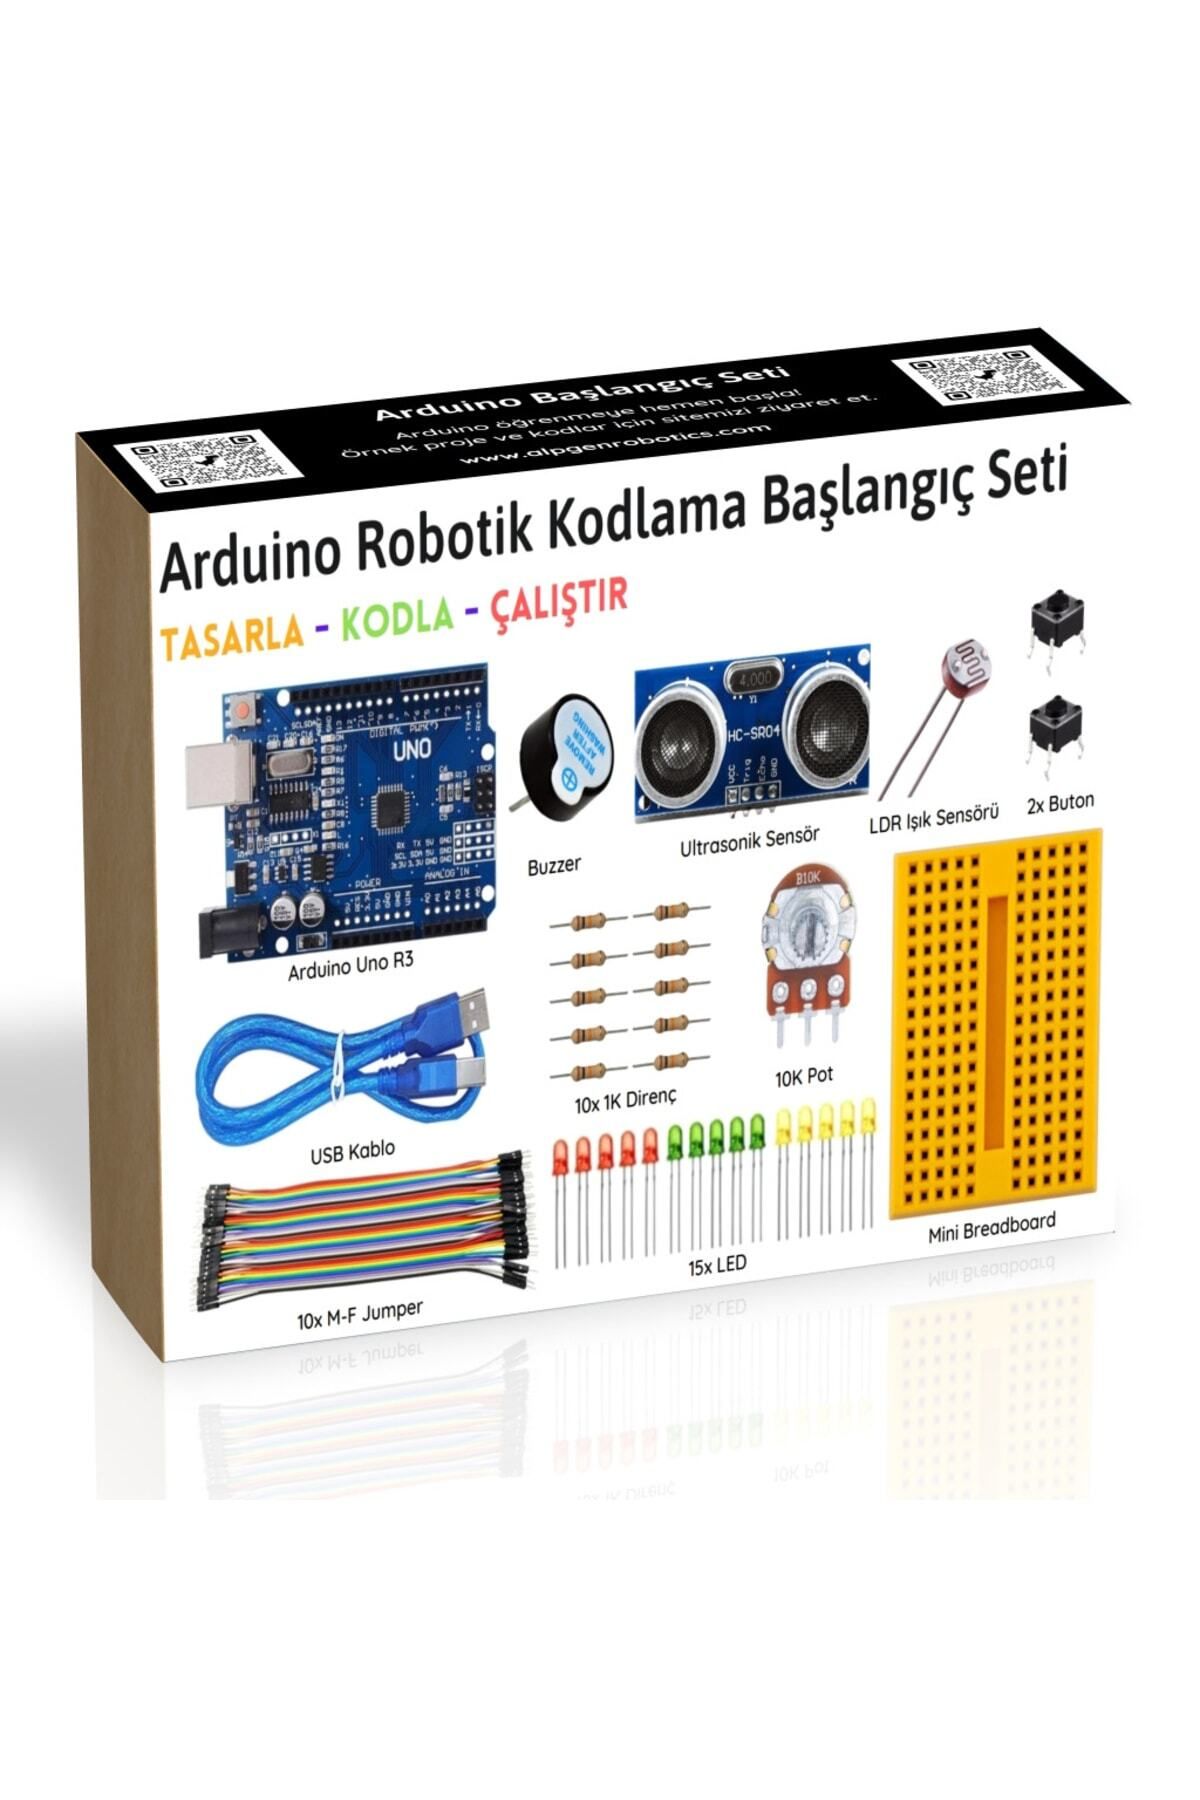 Arduino Uno R3 Robotik Kodlama Başlangıç Seti Proje Kitapçığı Alpgen Robotics